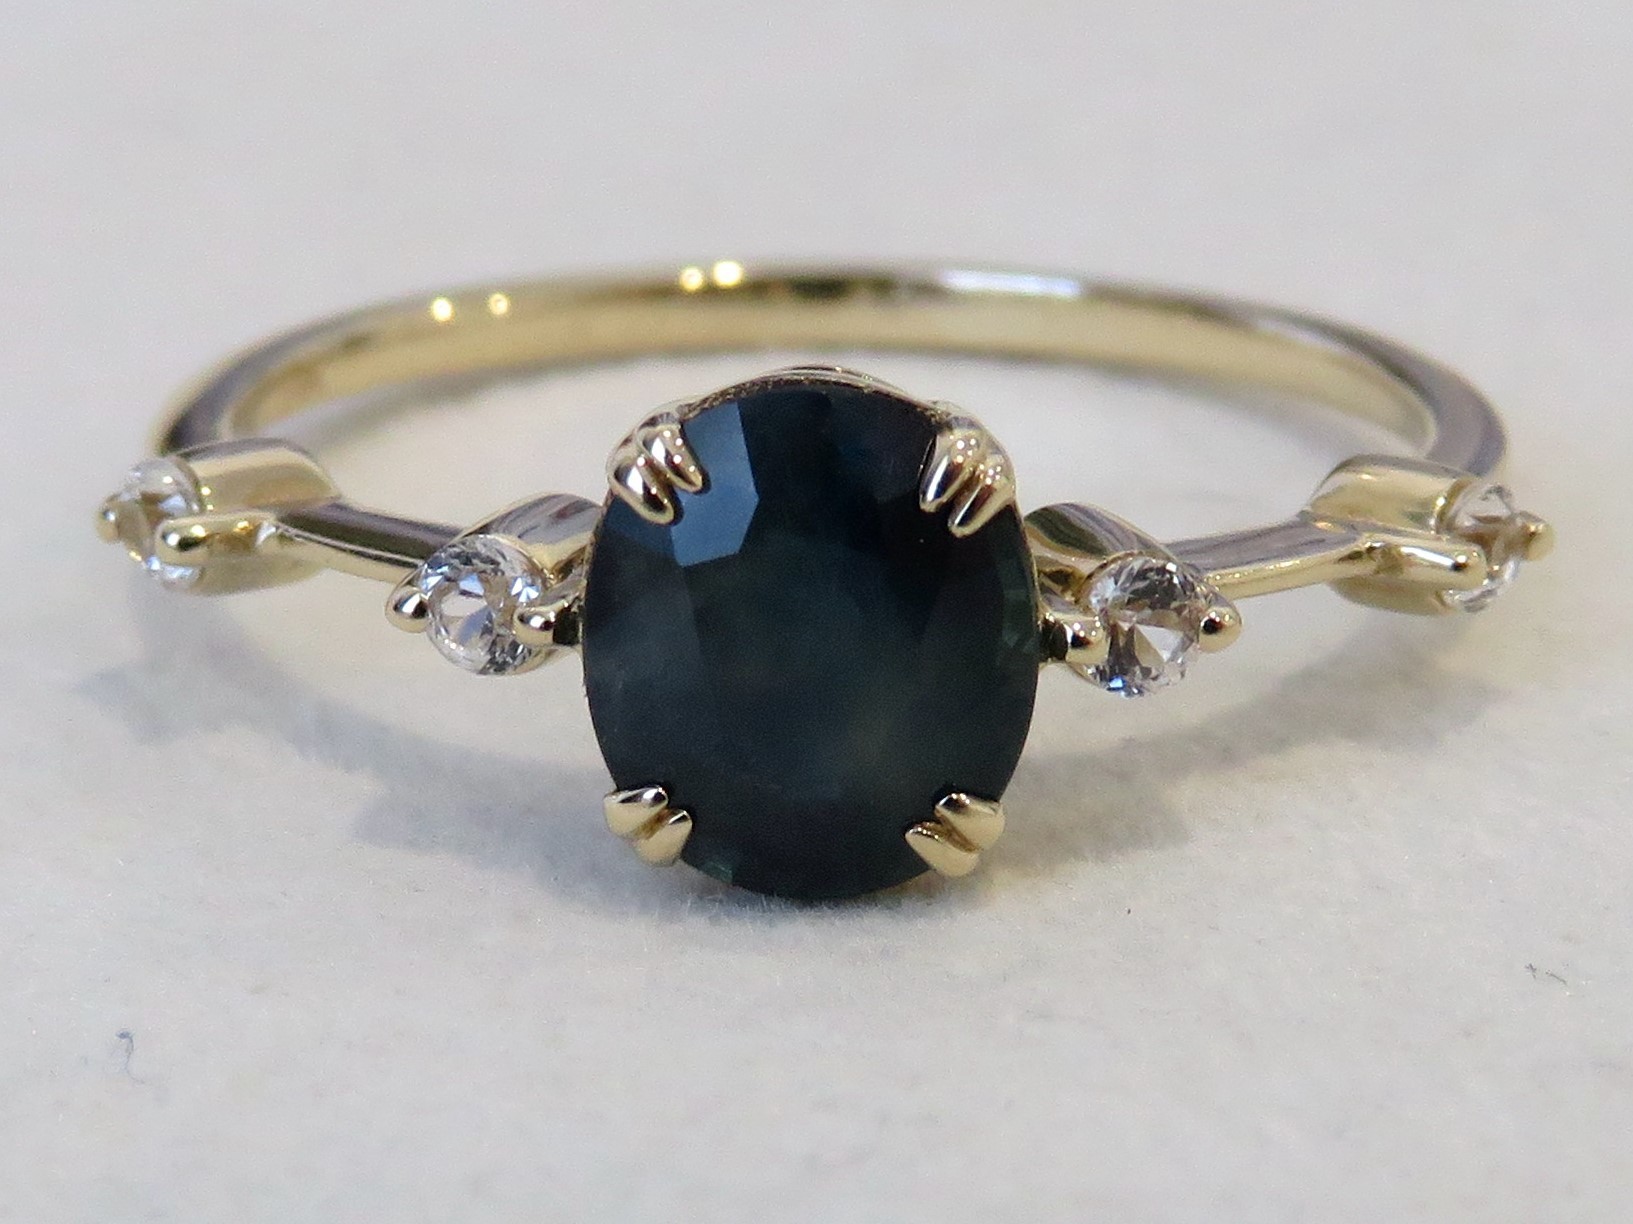 9k Yellow Gold 1.36ct Blue Sapphire & White Sapphire Ring